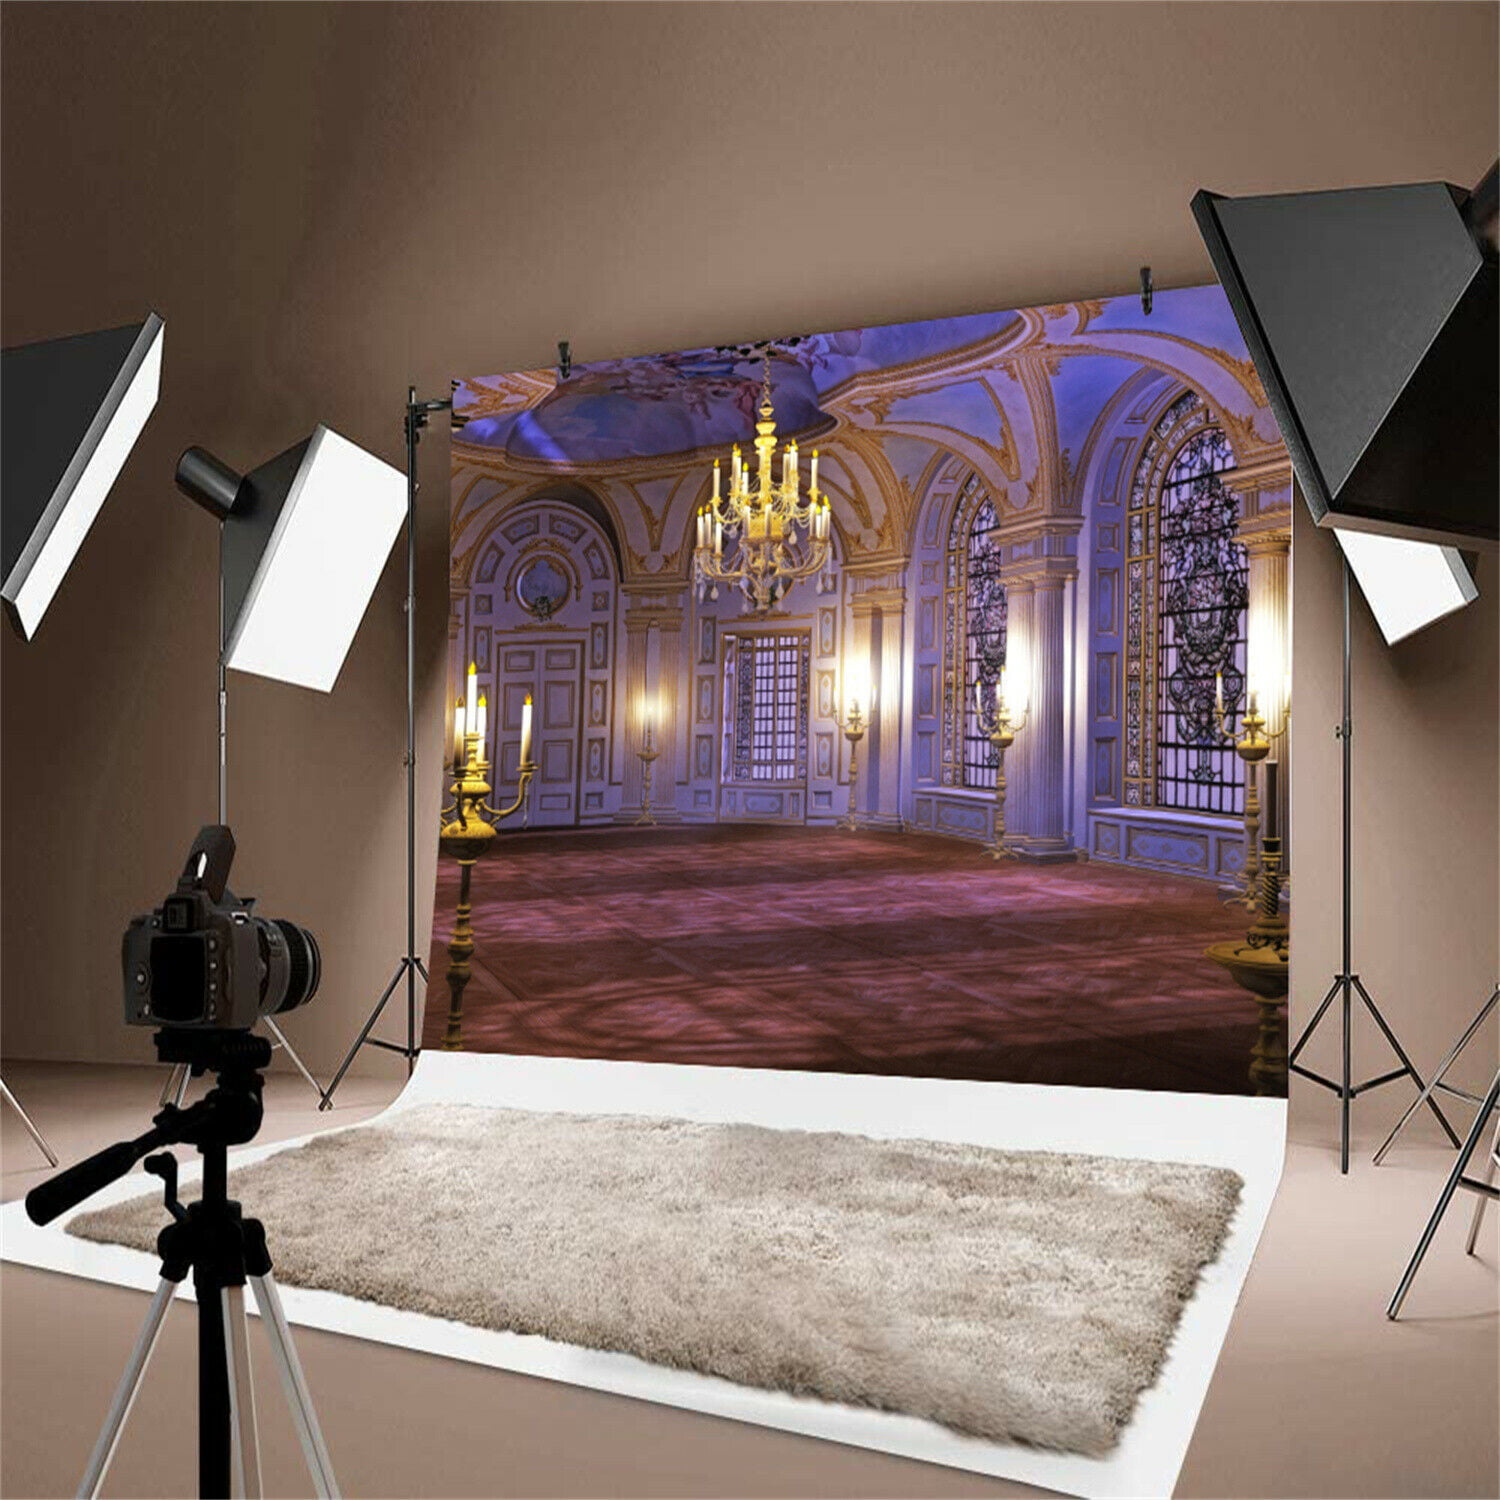 Balsa Circle Black 8 ft x 10 ft Photo Backdrop Stand Kit - Studio  Background - Wedding Party Photo Booth Studio Decorations